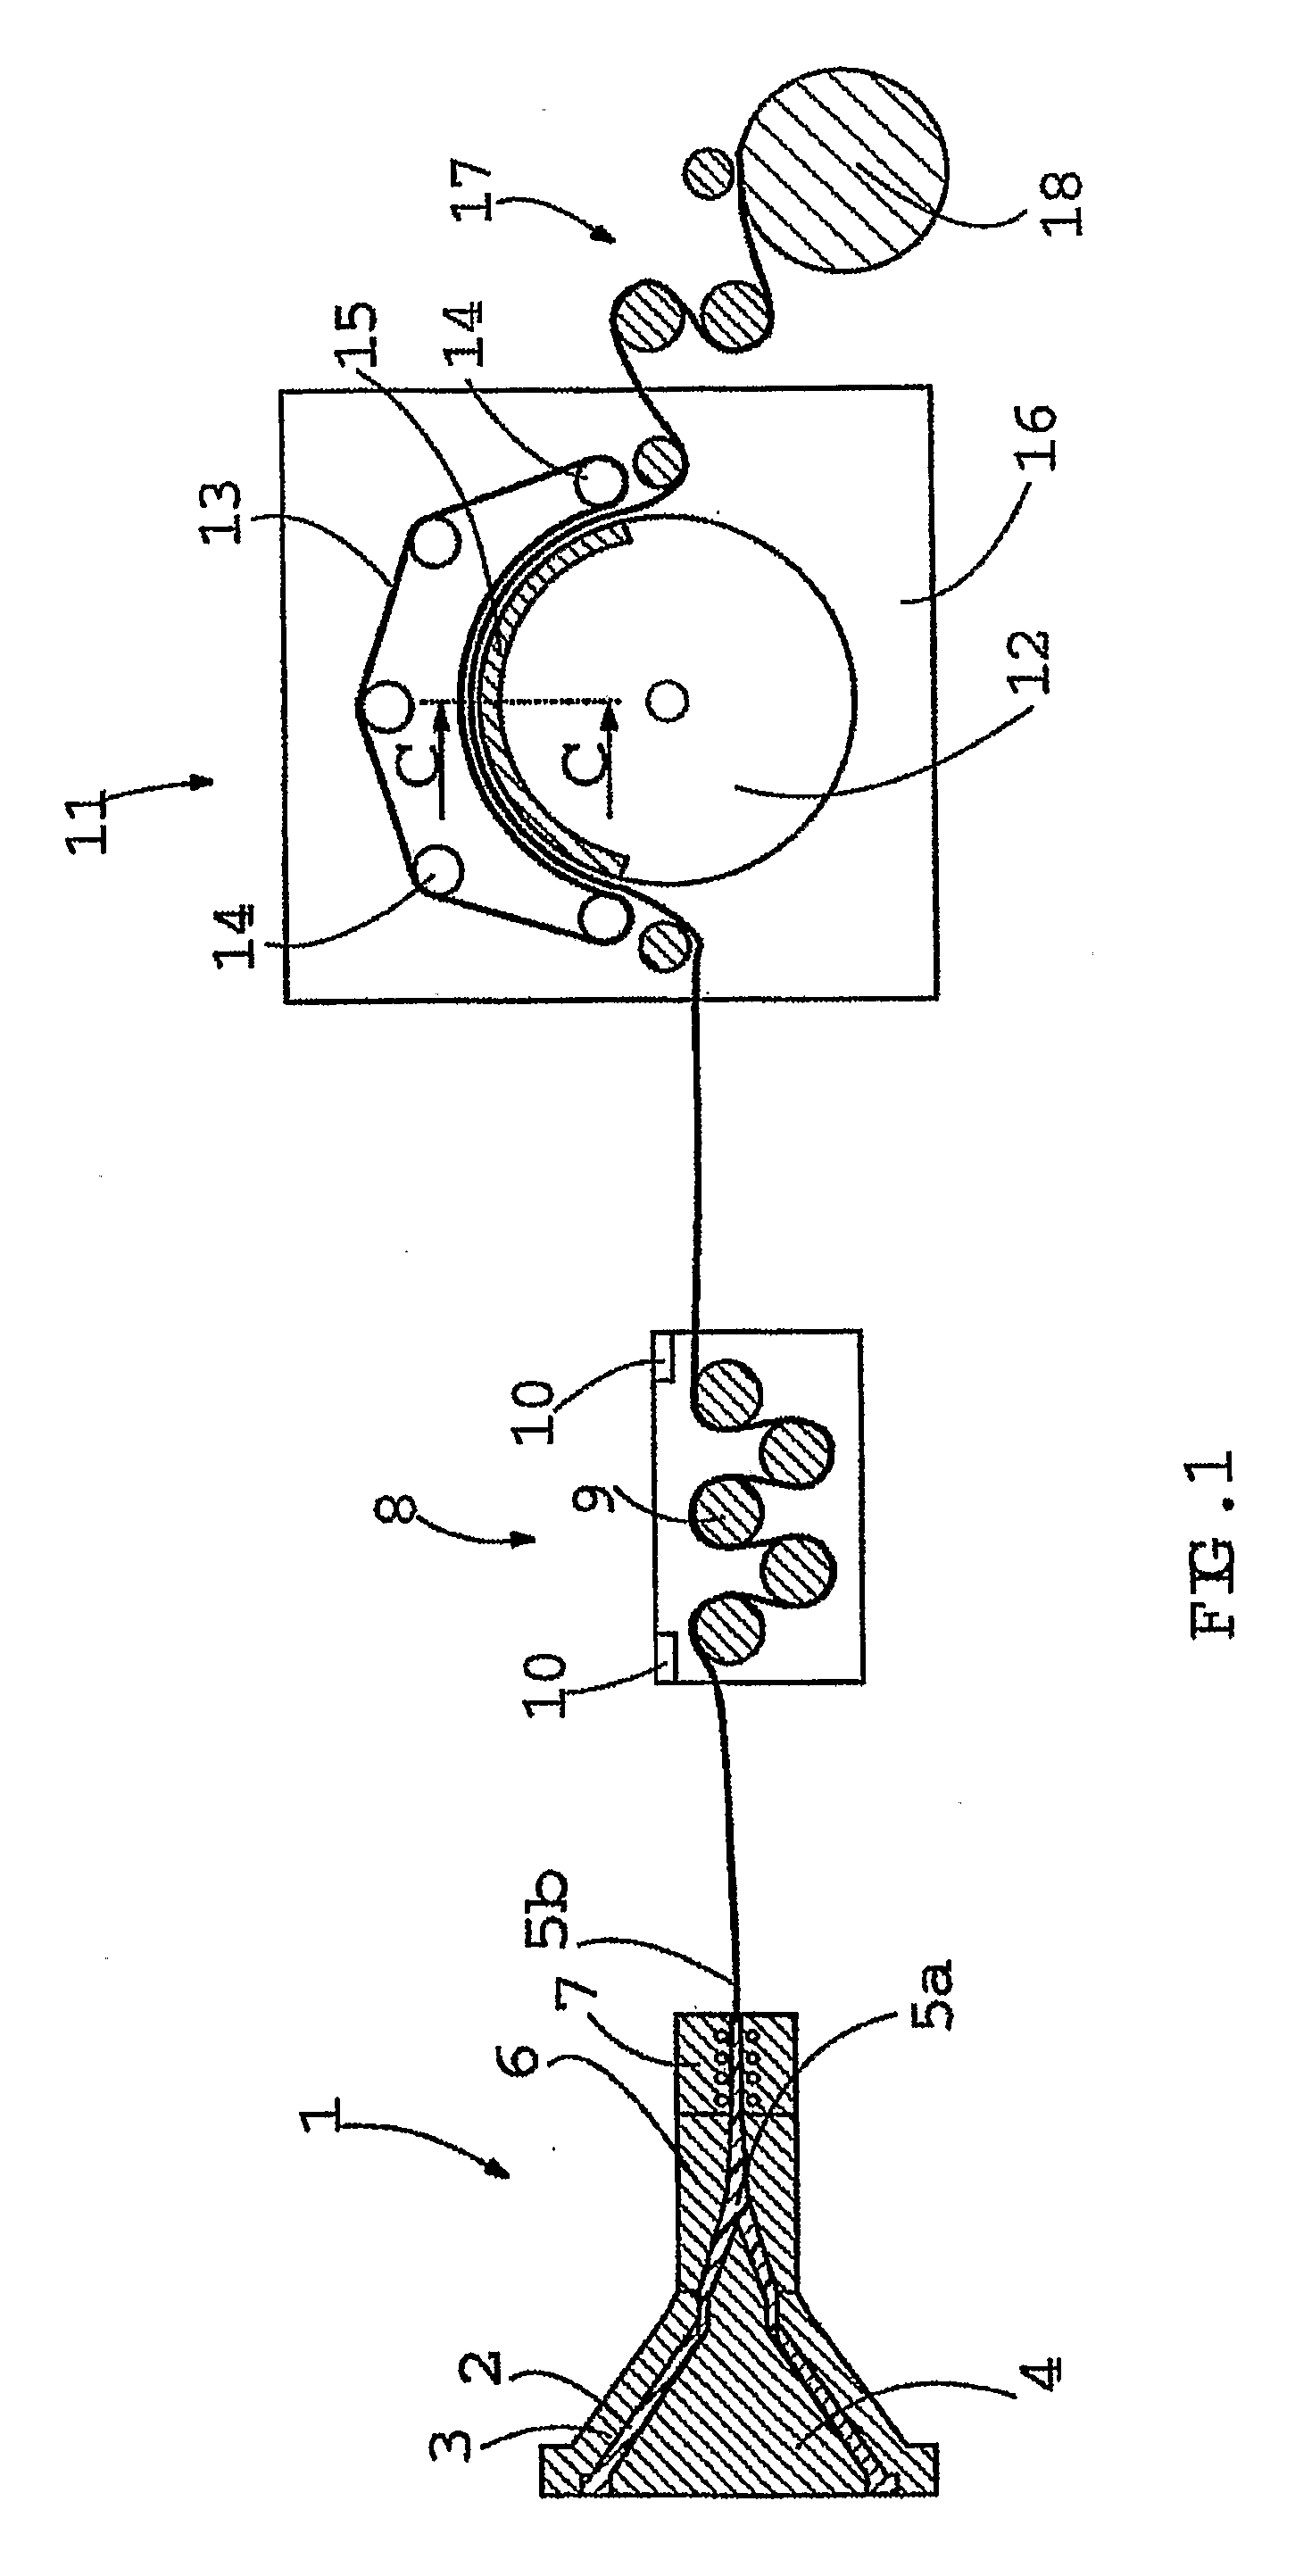 Method and apparatus for producing plastic film